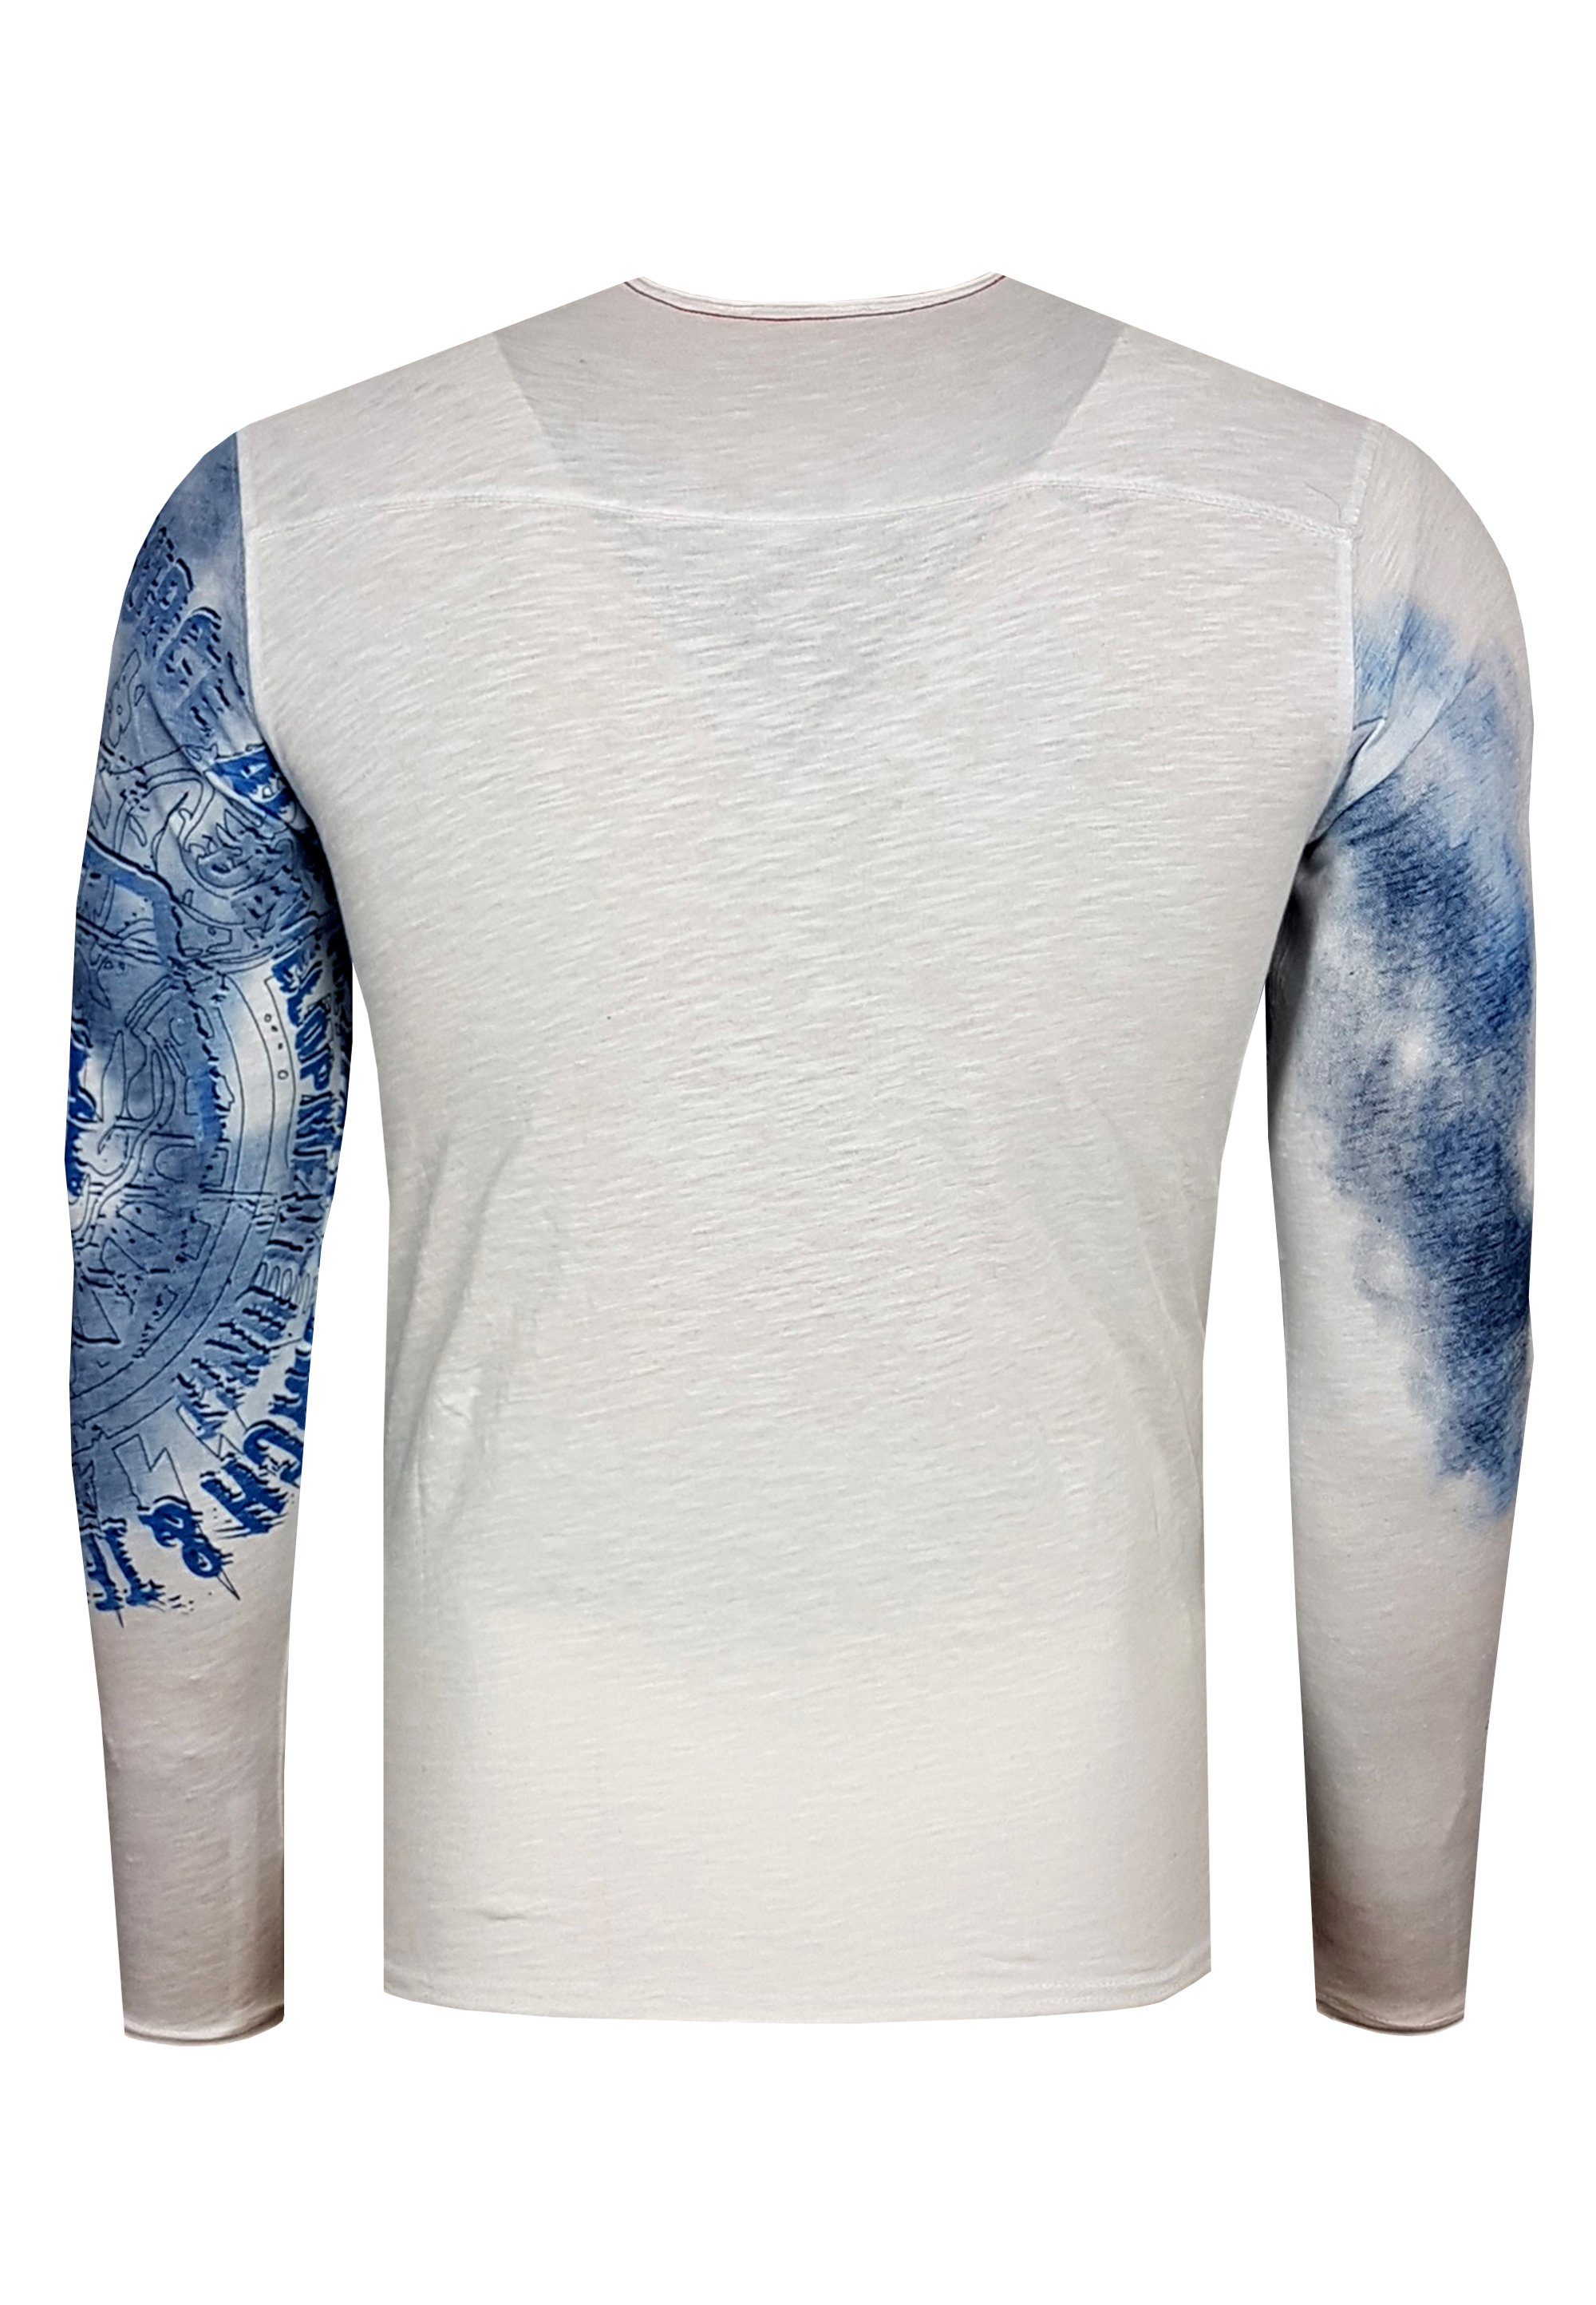 weiß-blau Frontprint Langarmshirt mit coolem Neal Rusty